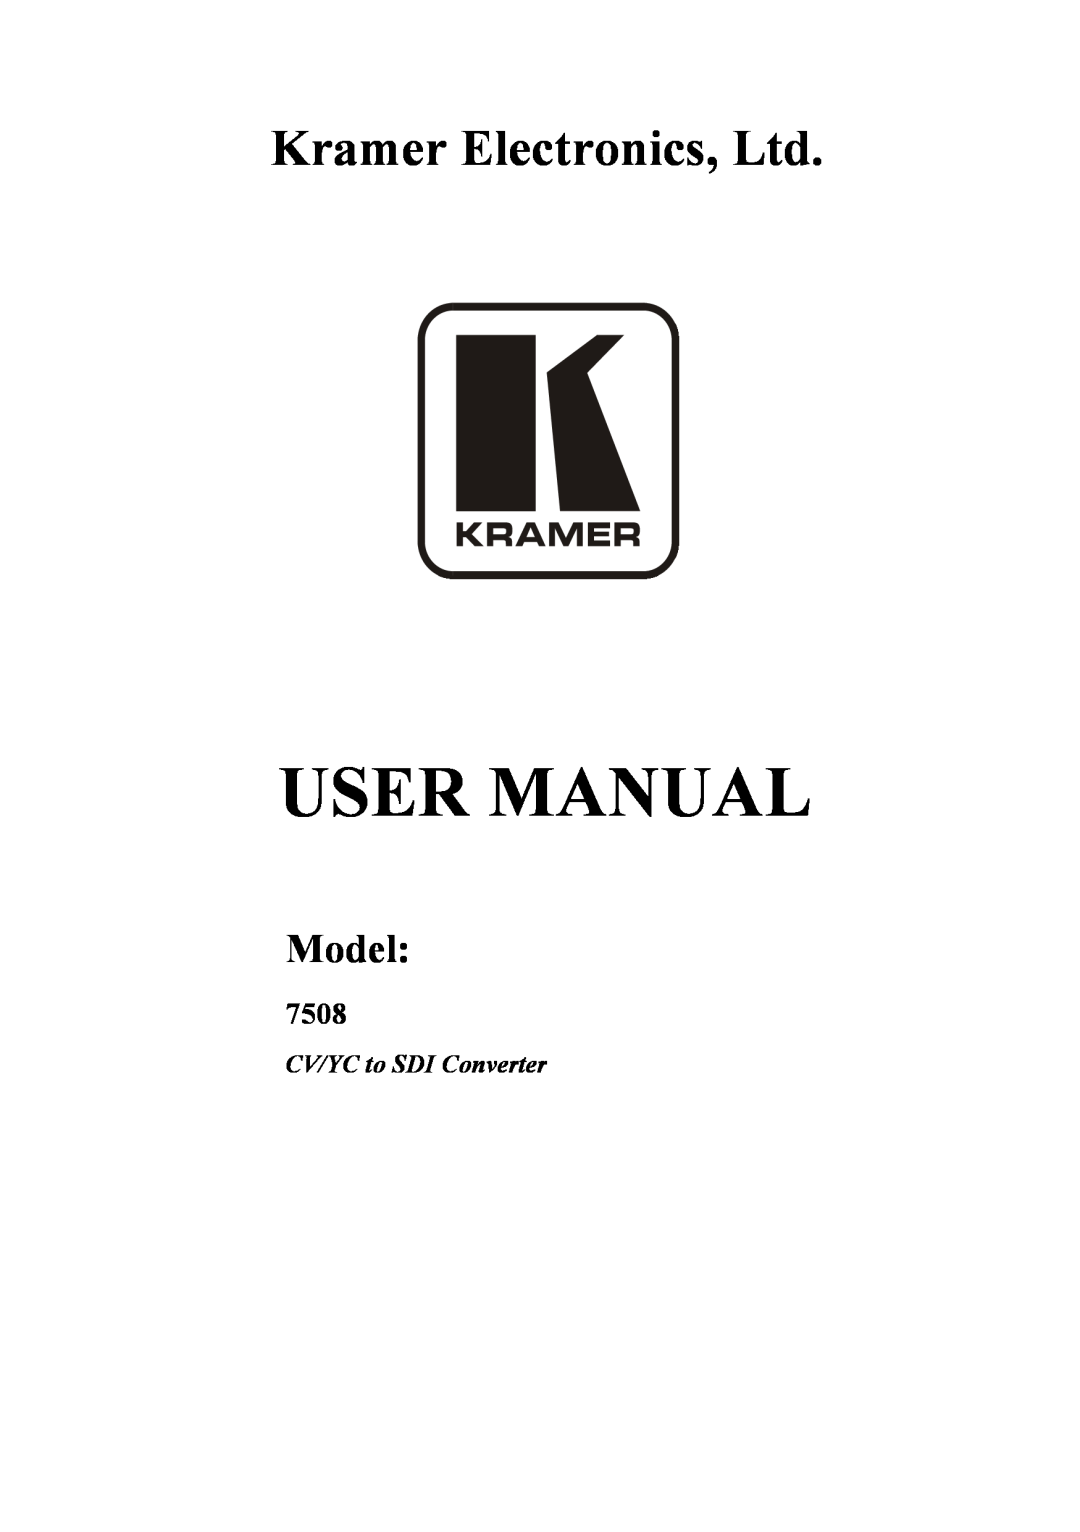 Kramer Electronics 7508 user manual Model, CV/YC to SDI Converter 